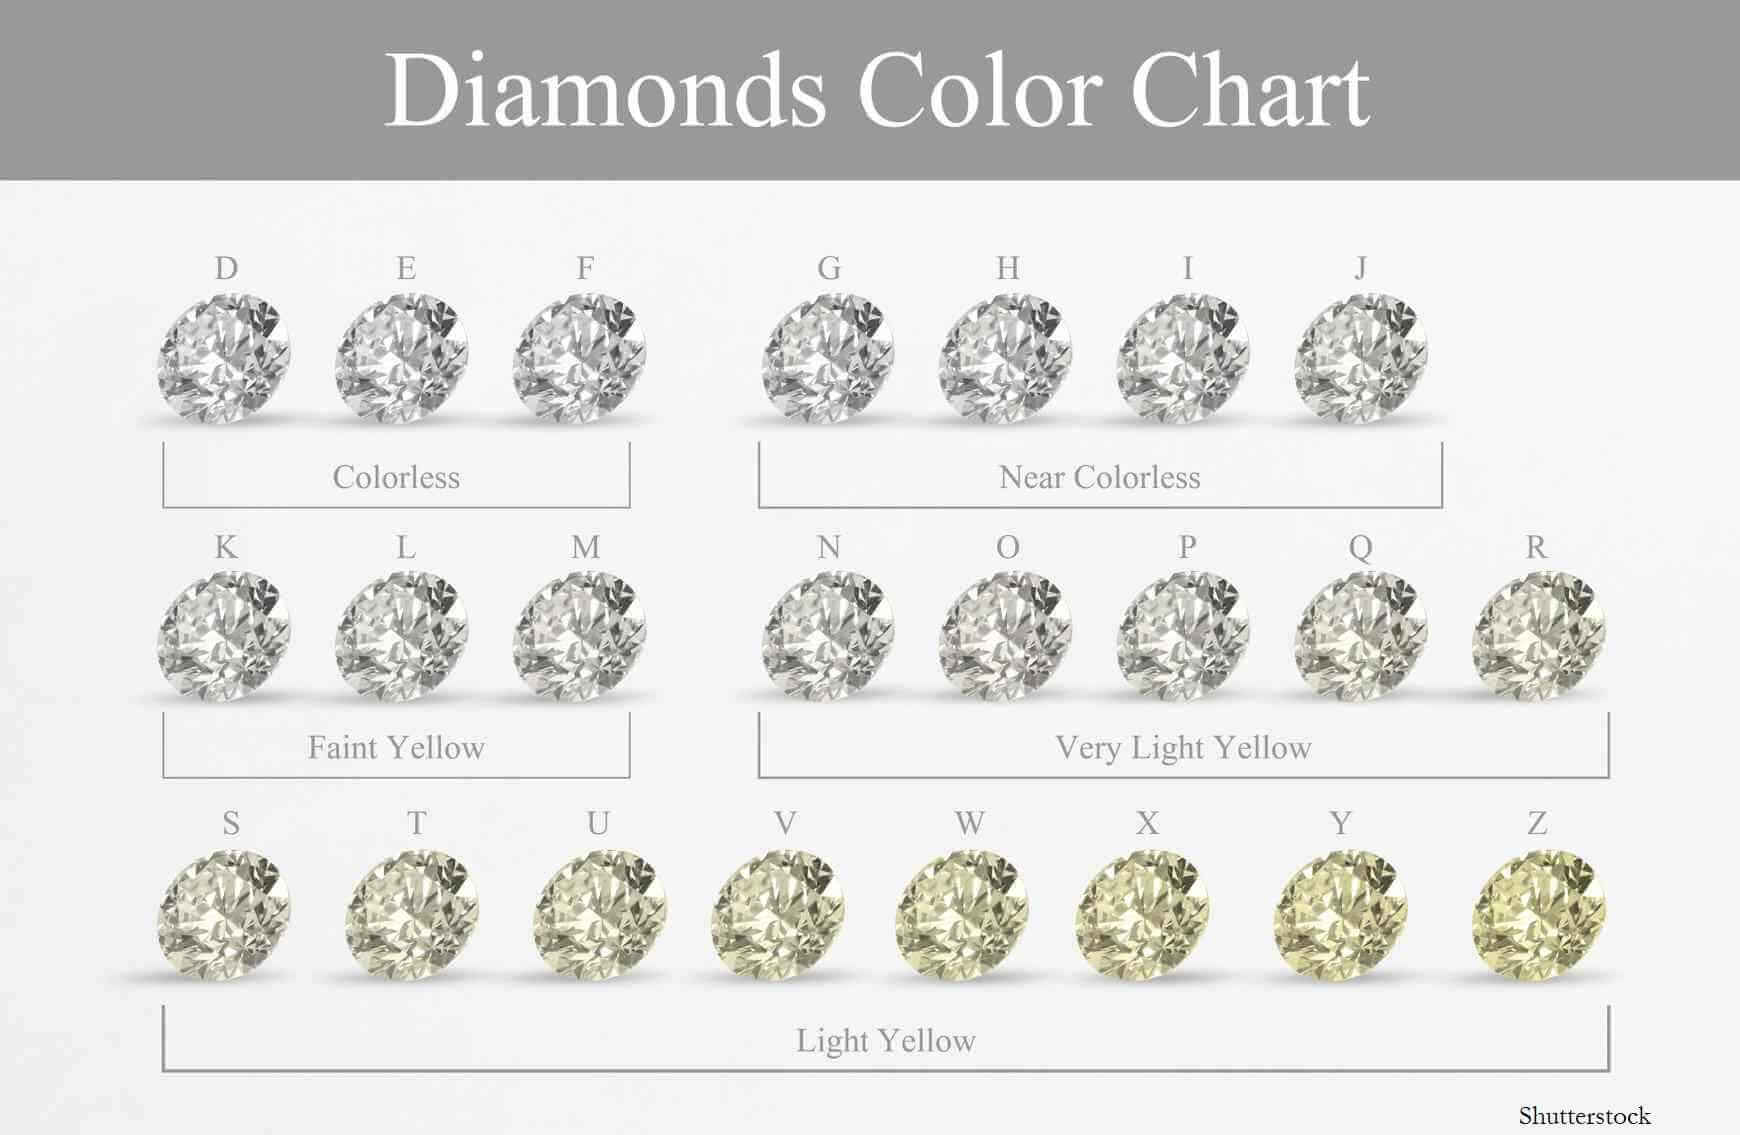 Full diamond color chart